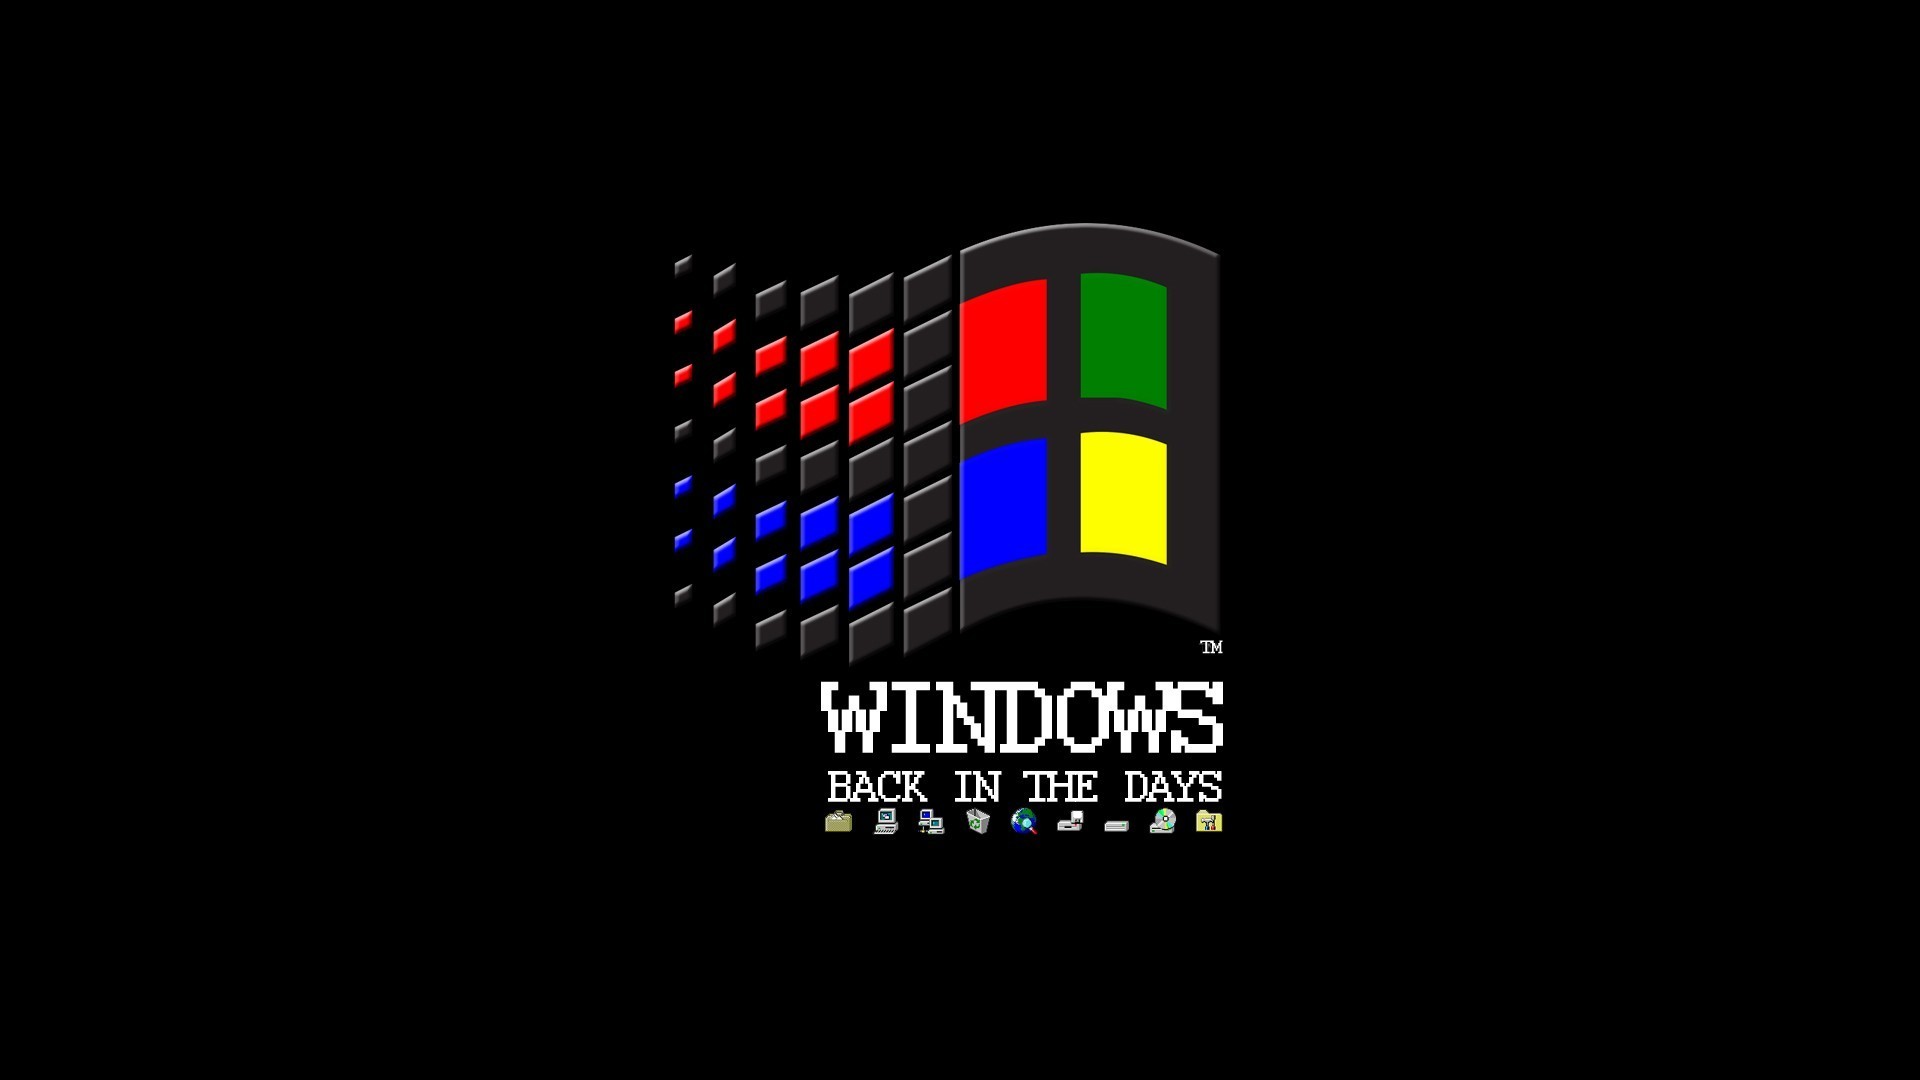 1920x1080 Black Background, Floppy Disk, MS DOS, Internet, Microsoft Windows, Vintage,